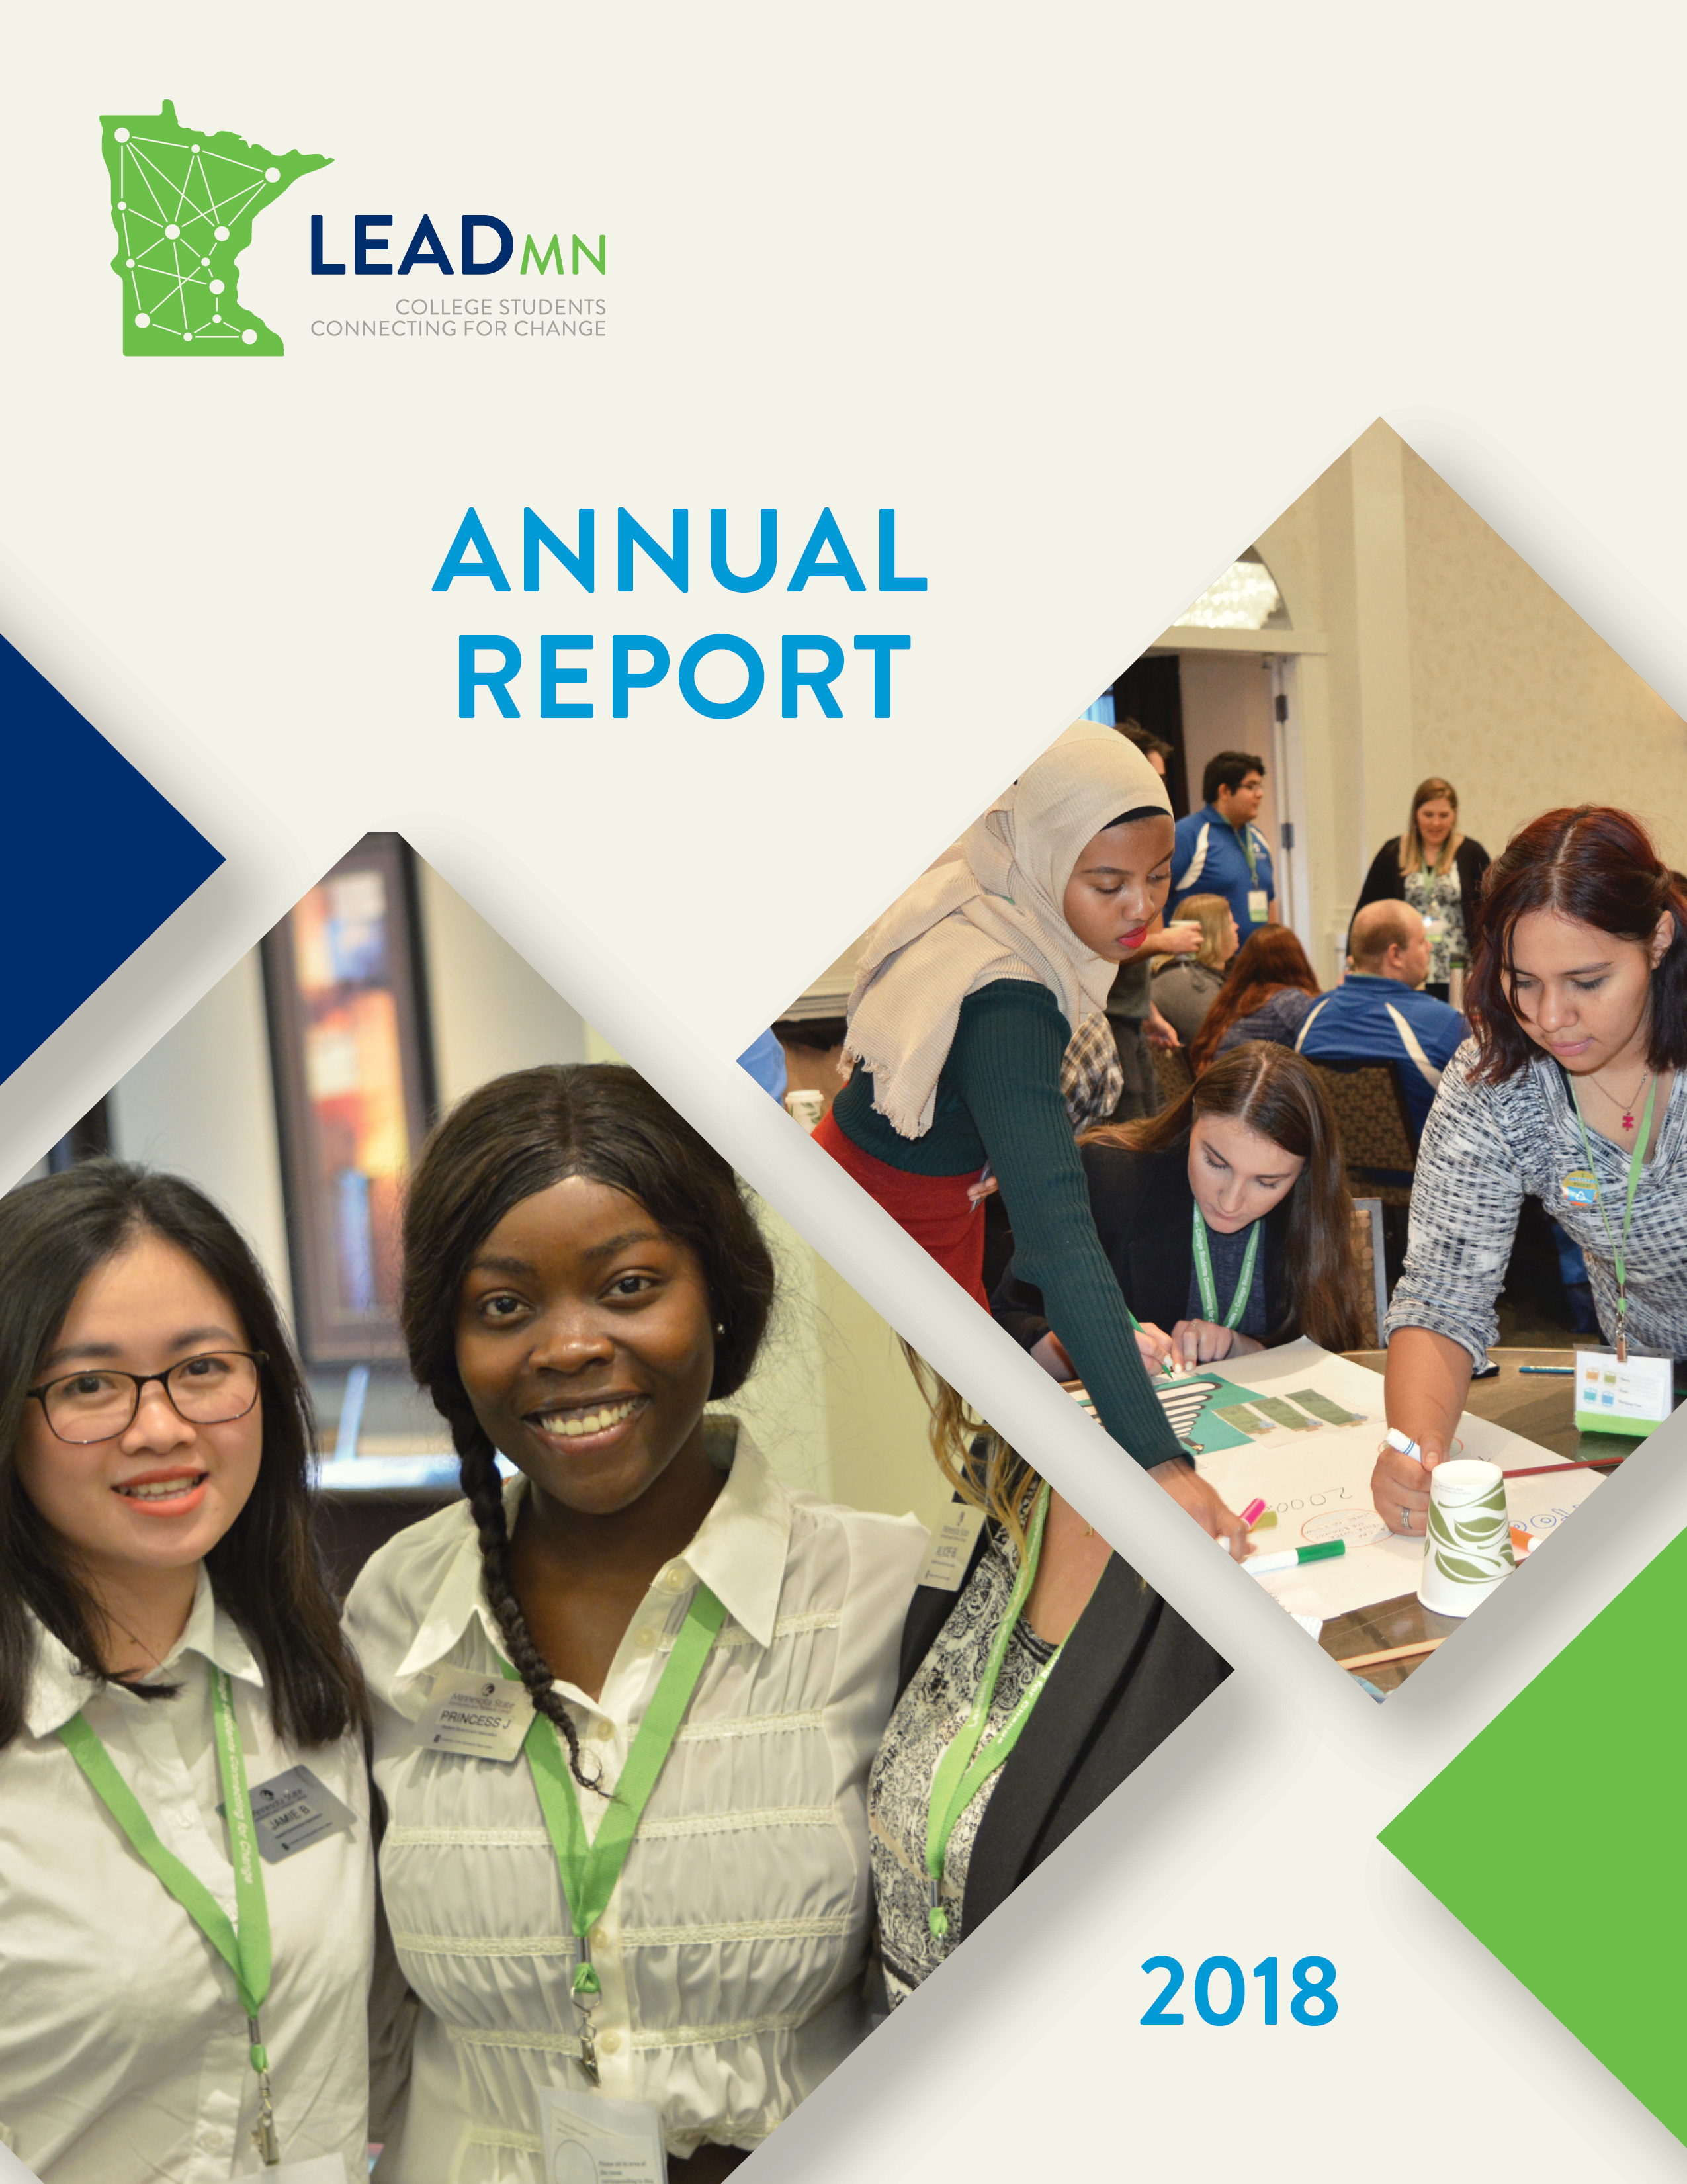 LeadMN 2018 Annual Report Cover Image